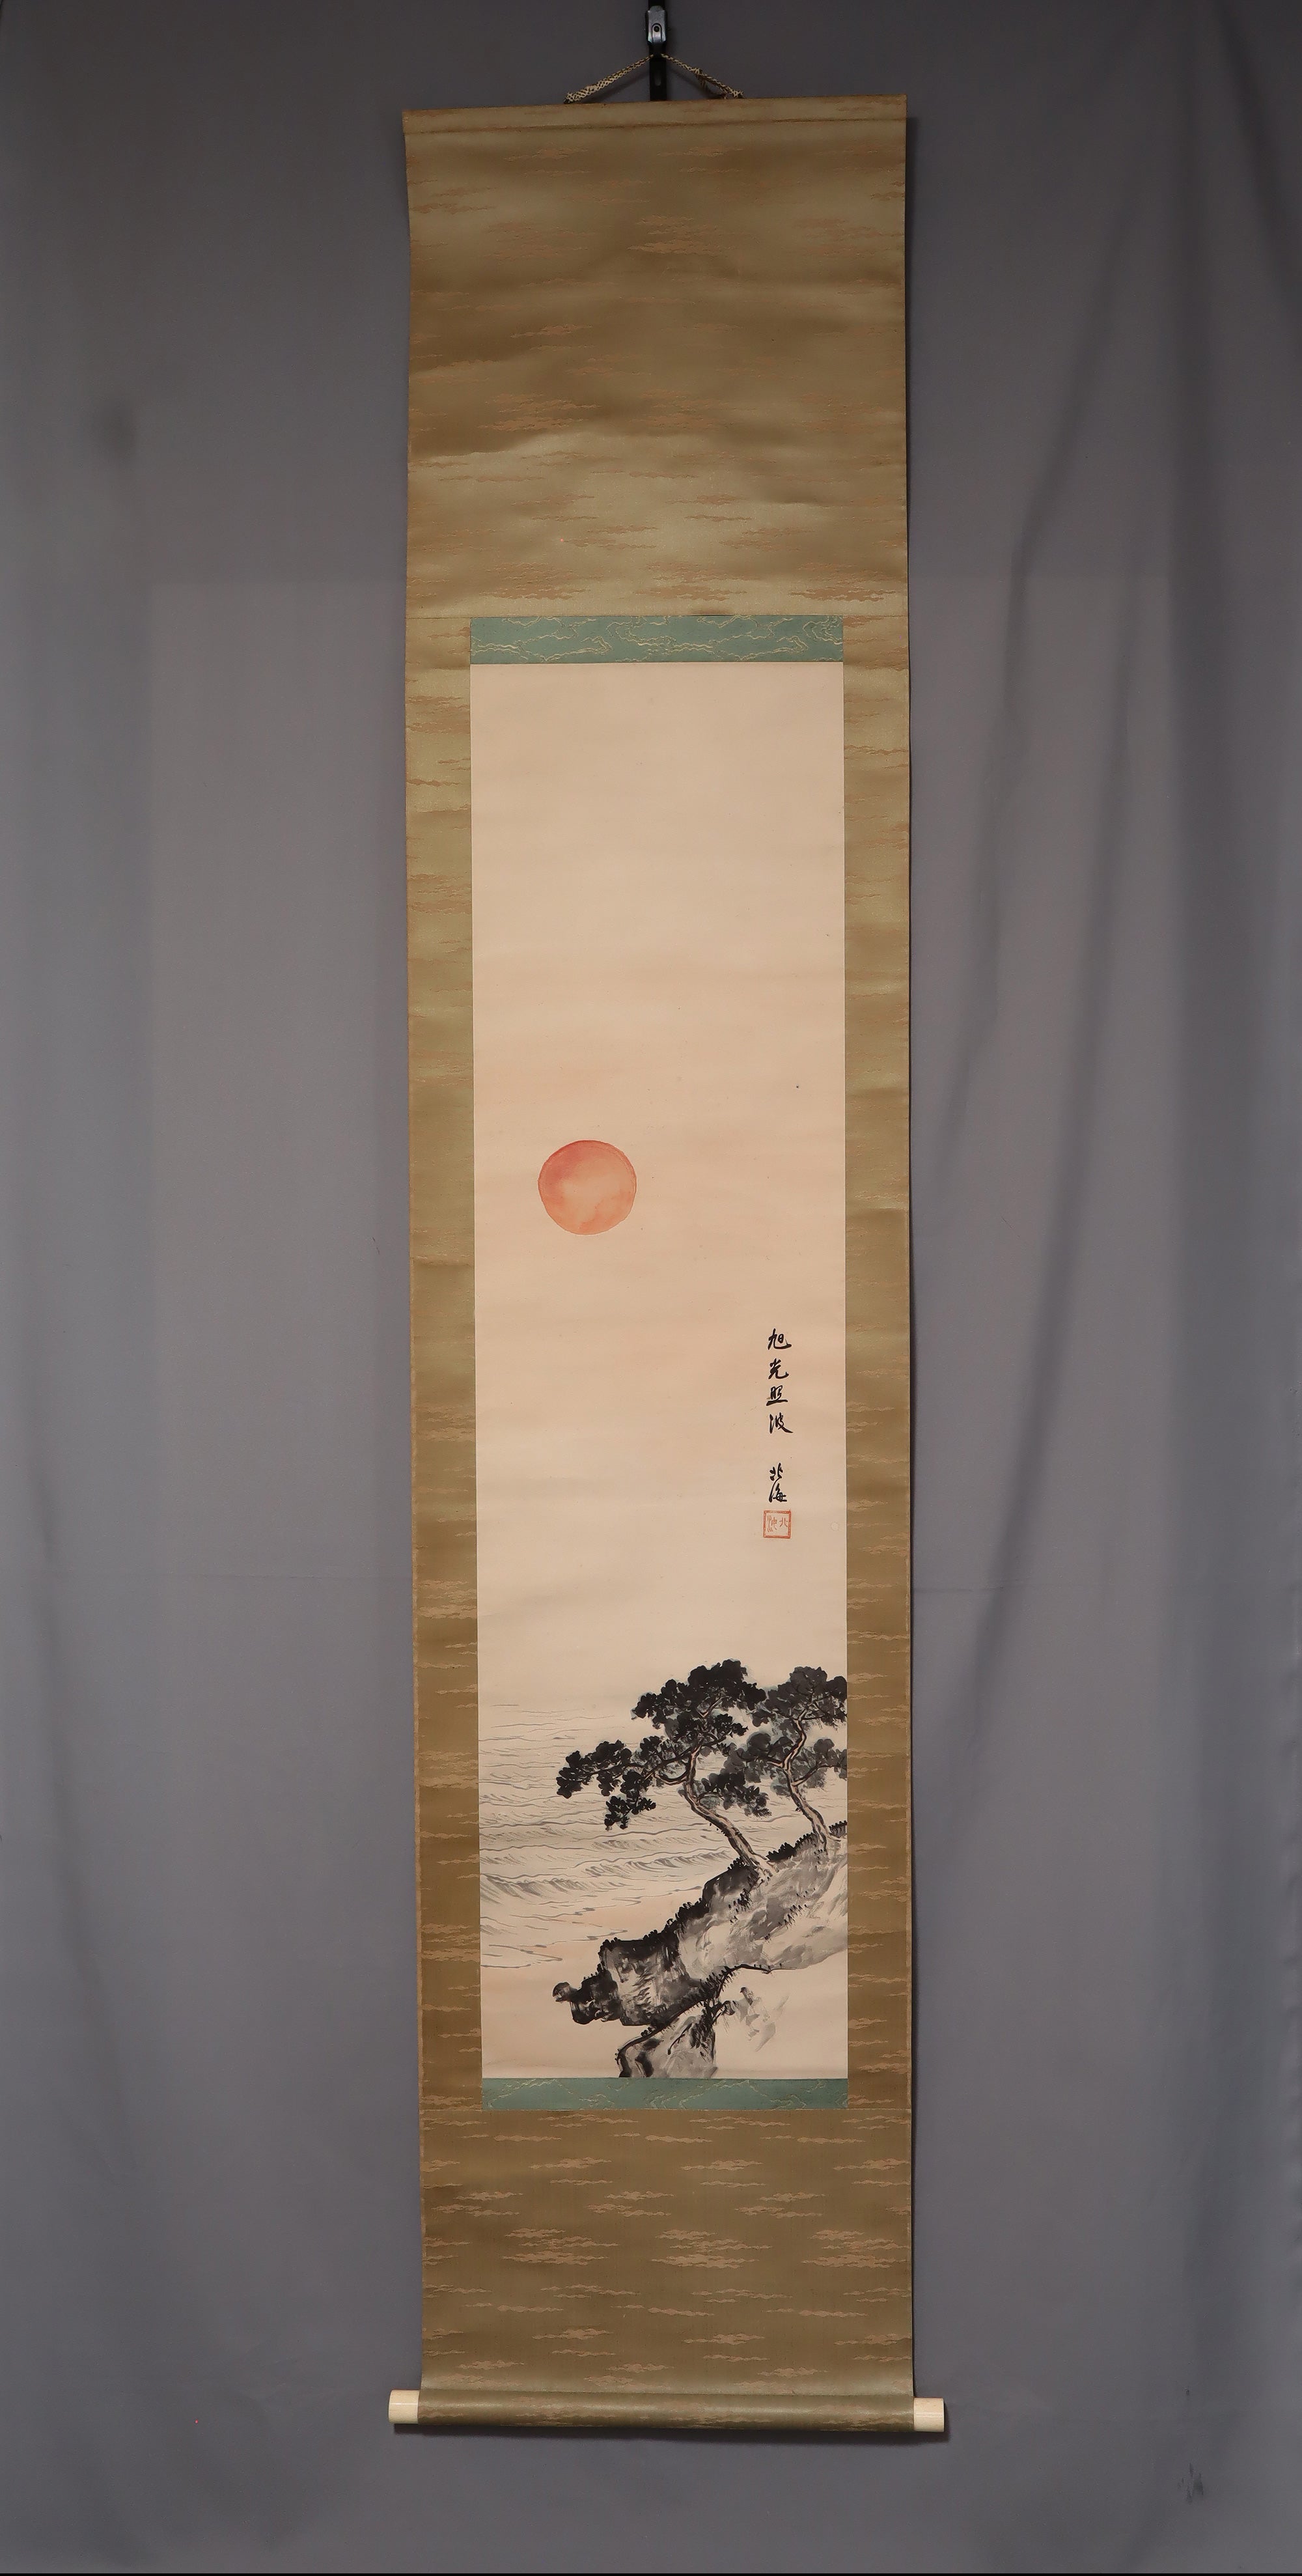 高岛北（Takashima Hokkai）（1850-1931）“崛起的太阳和海浪”。 Meiji-Taisho时代